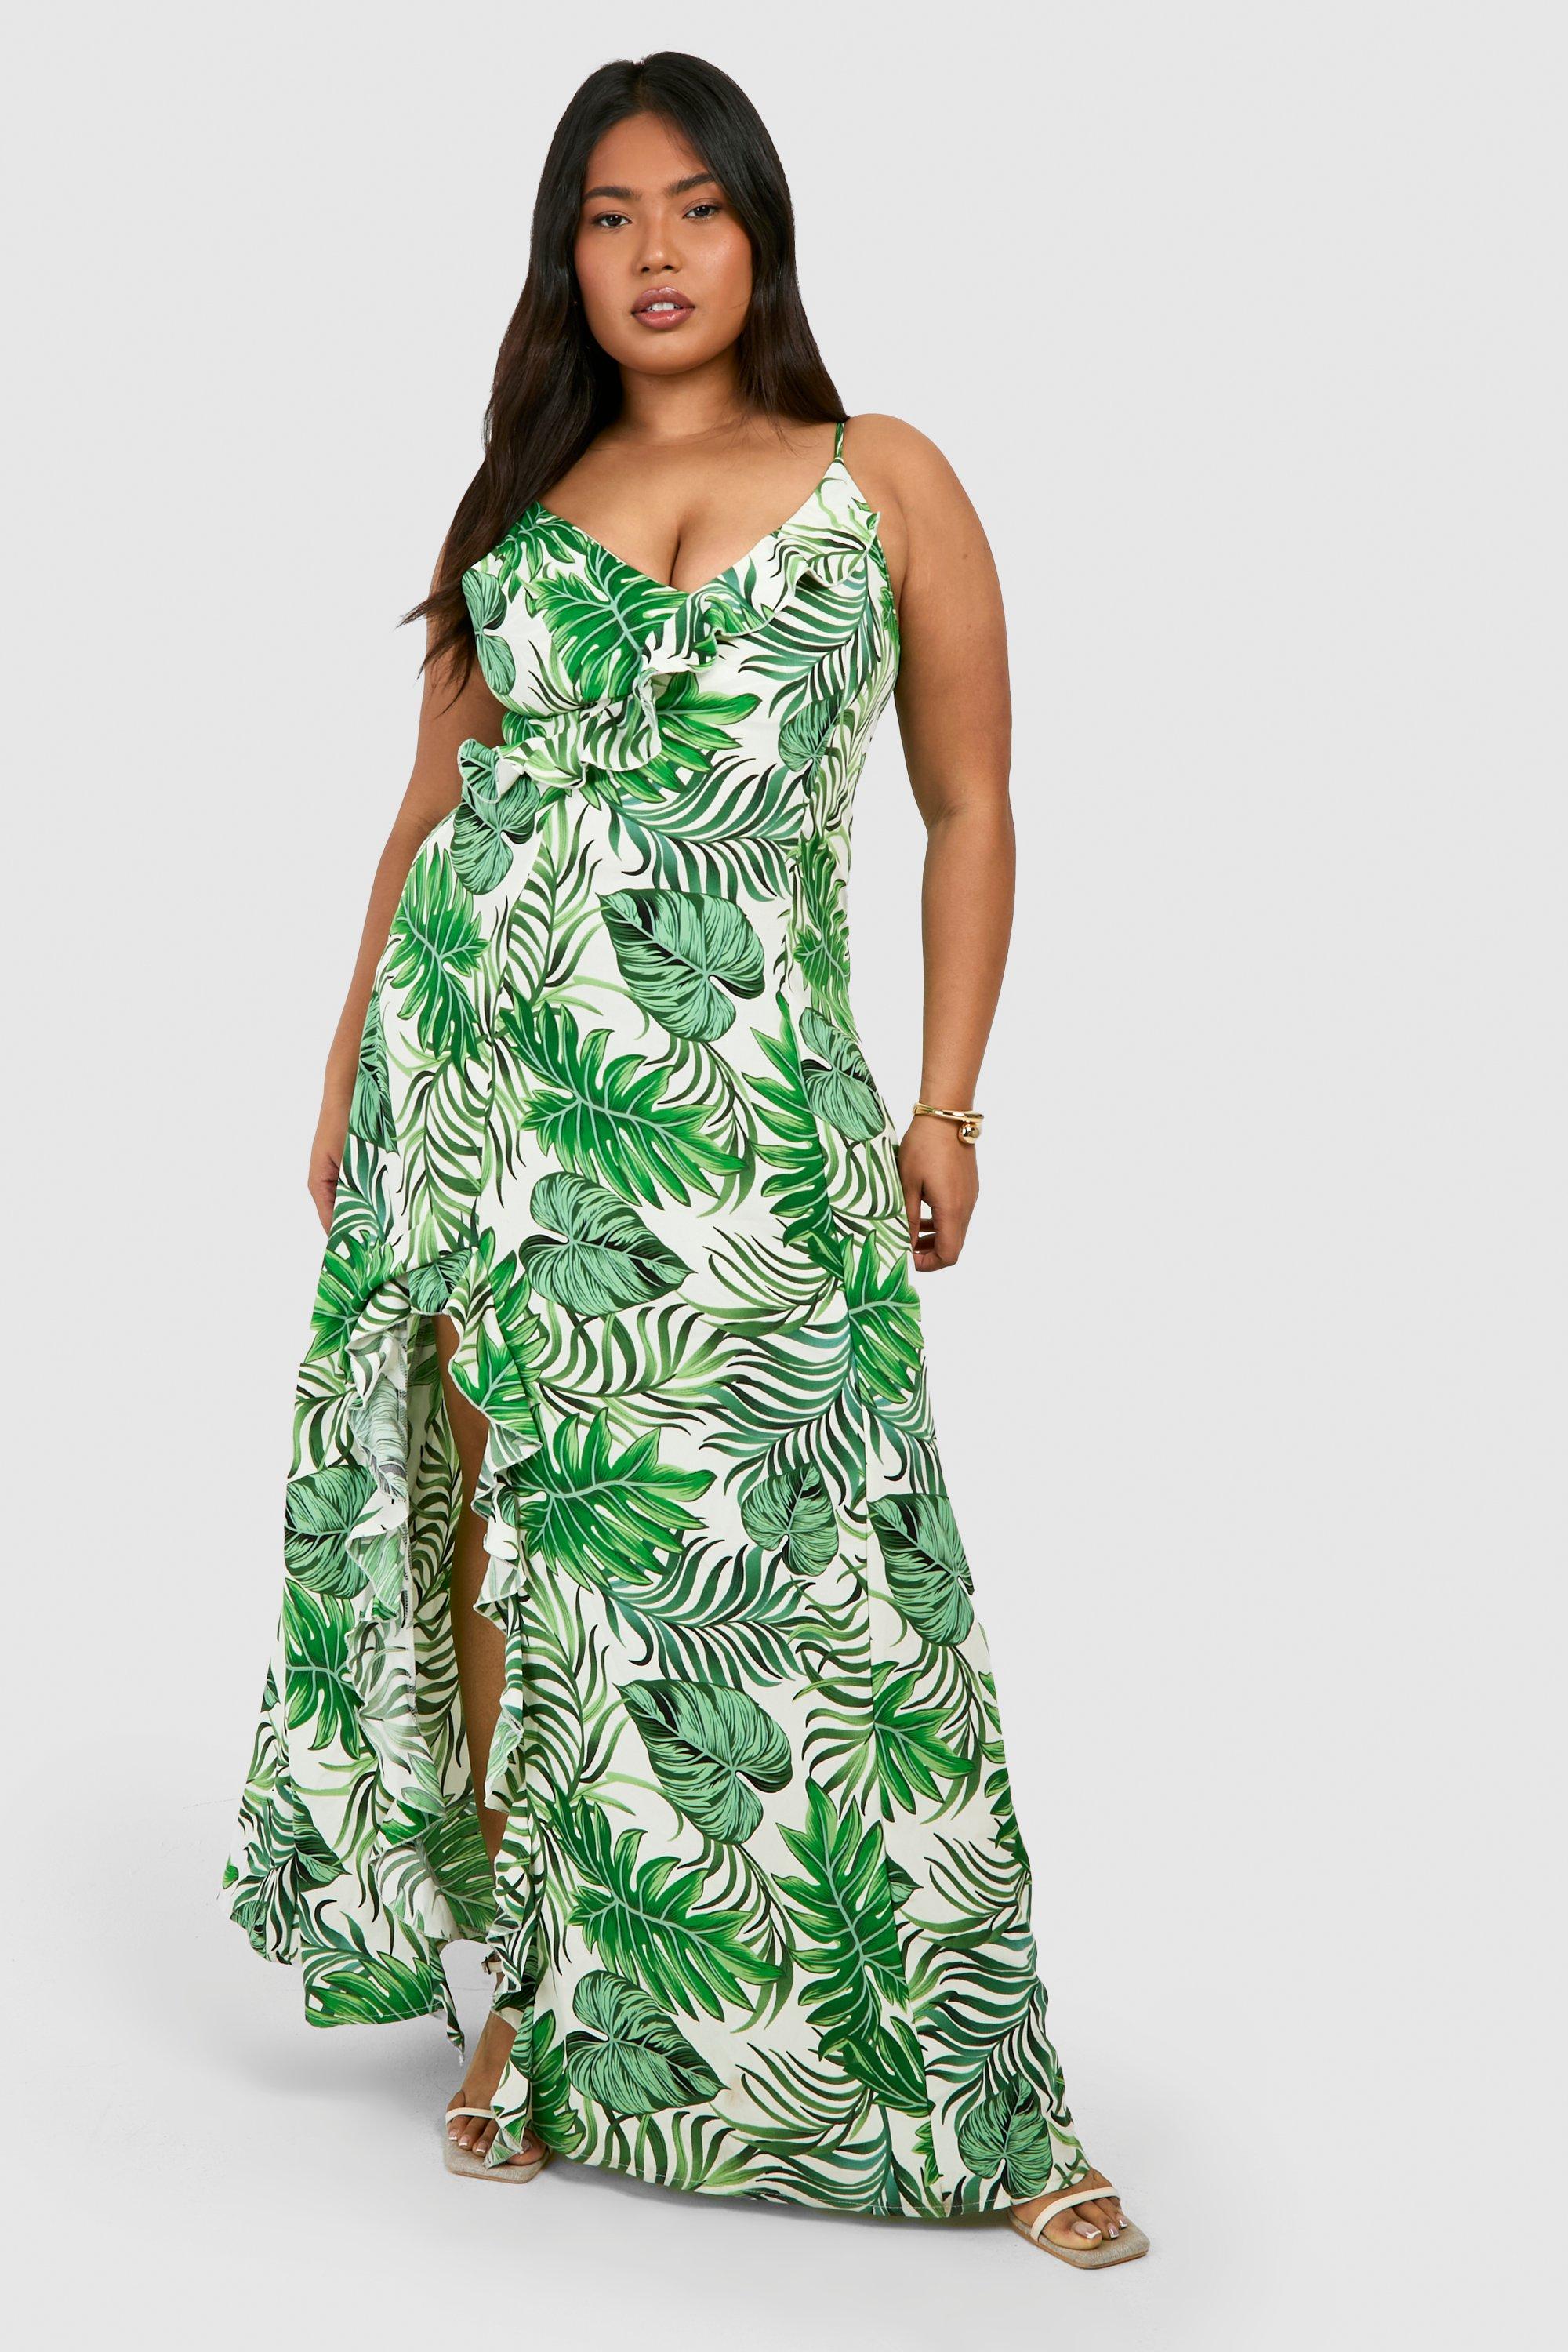 Tropical Print | Tropical Dresses ...